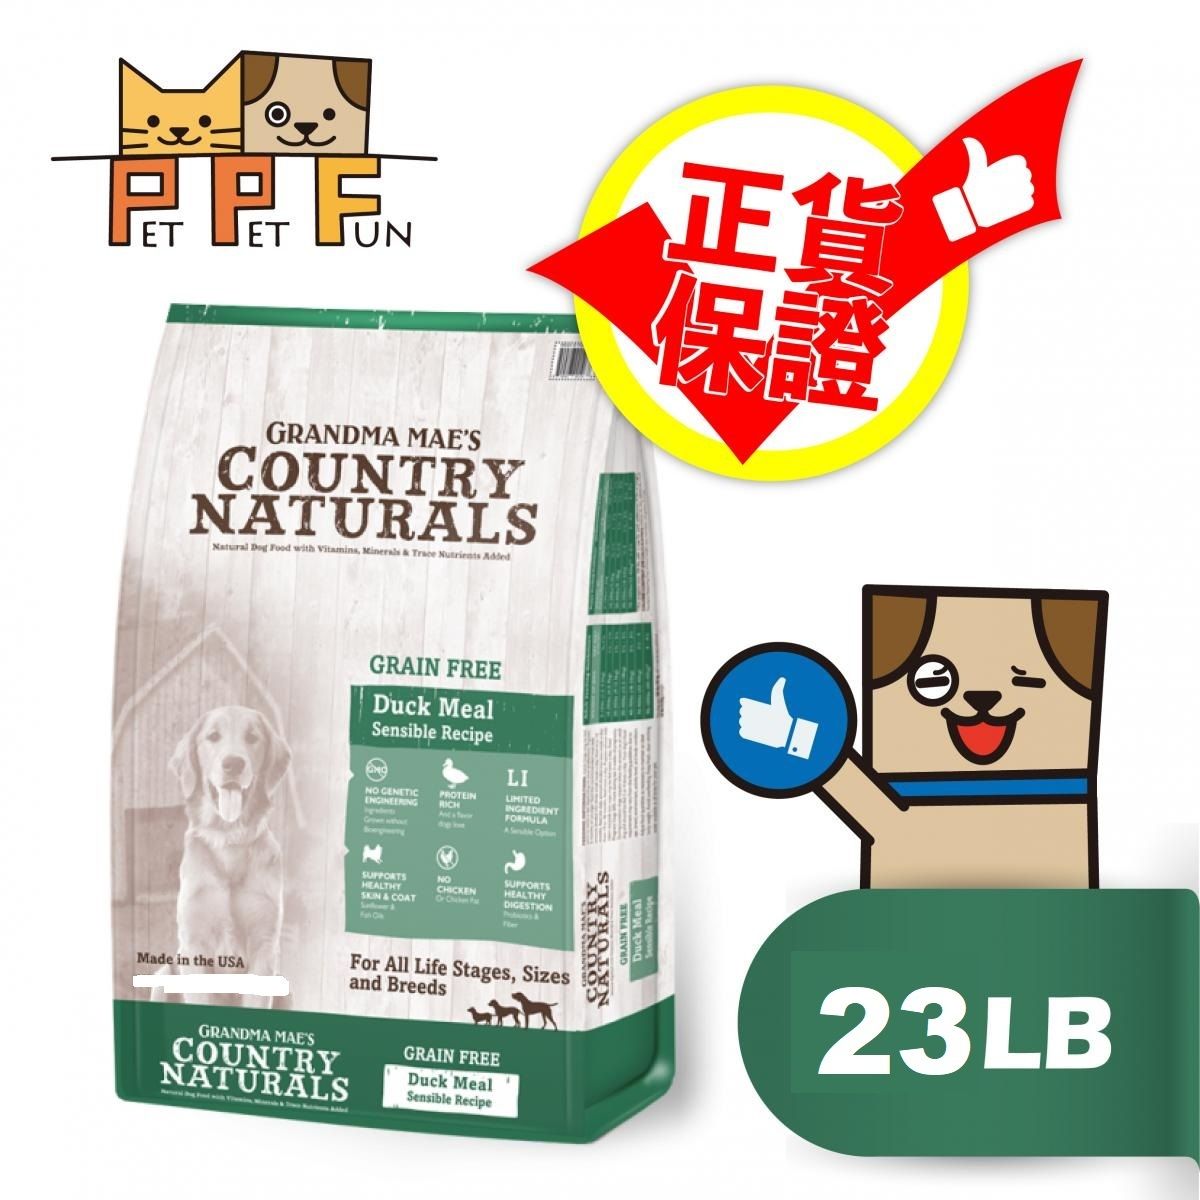 (19) #18676 CN0219 Country Naturals - Country Naturals Grain Free Duck Meal Sensible Recipe 23LB